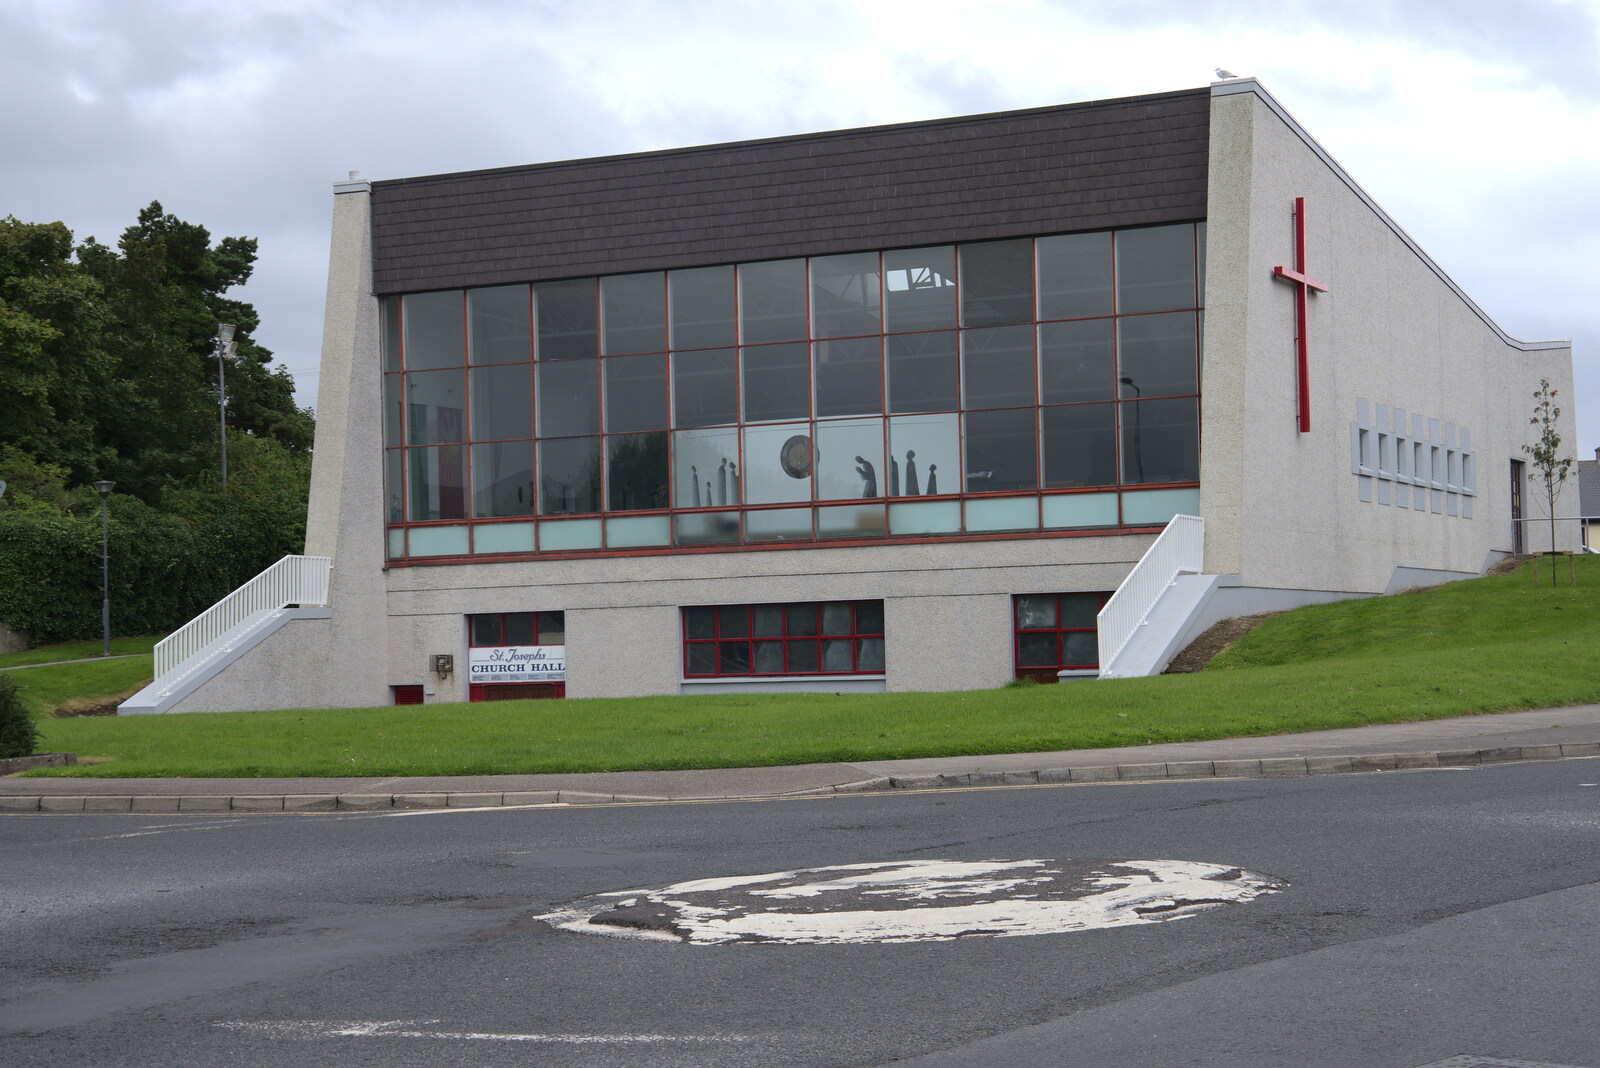 St Joseph's church hall on Avondale from Walks Around Benbulben and Carrowmore, County Sligo, Ireland - 13th August 2021